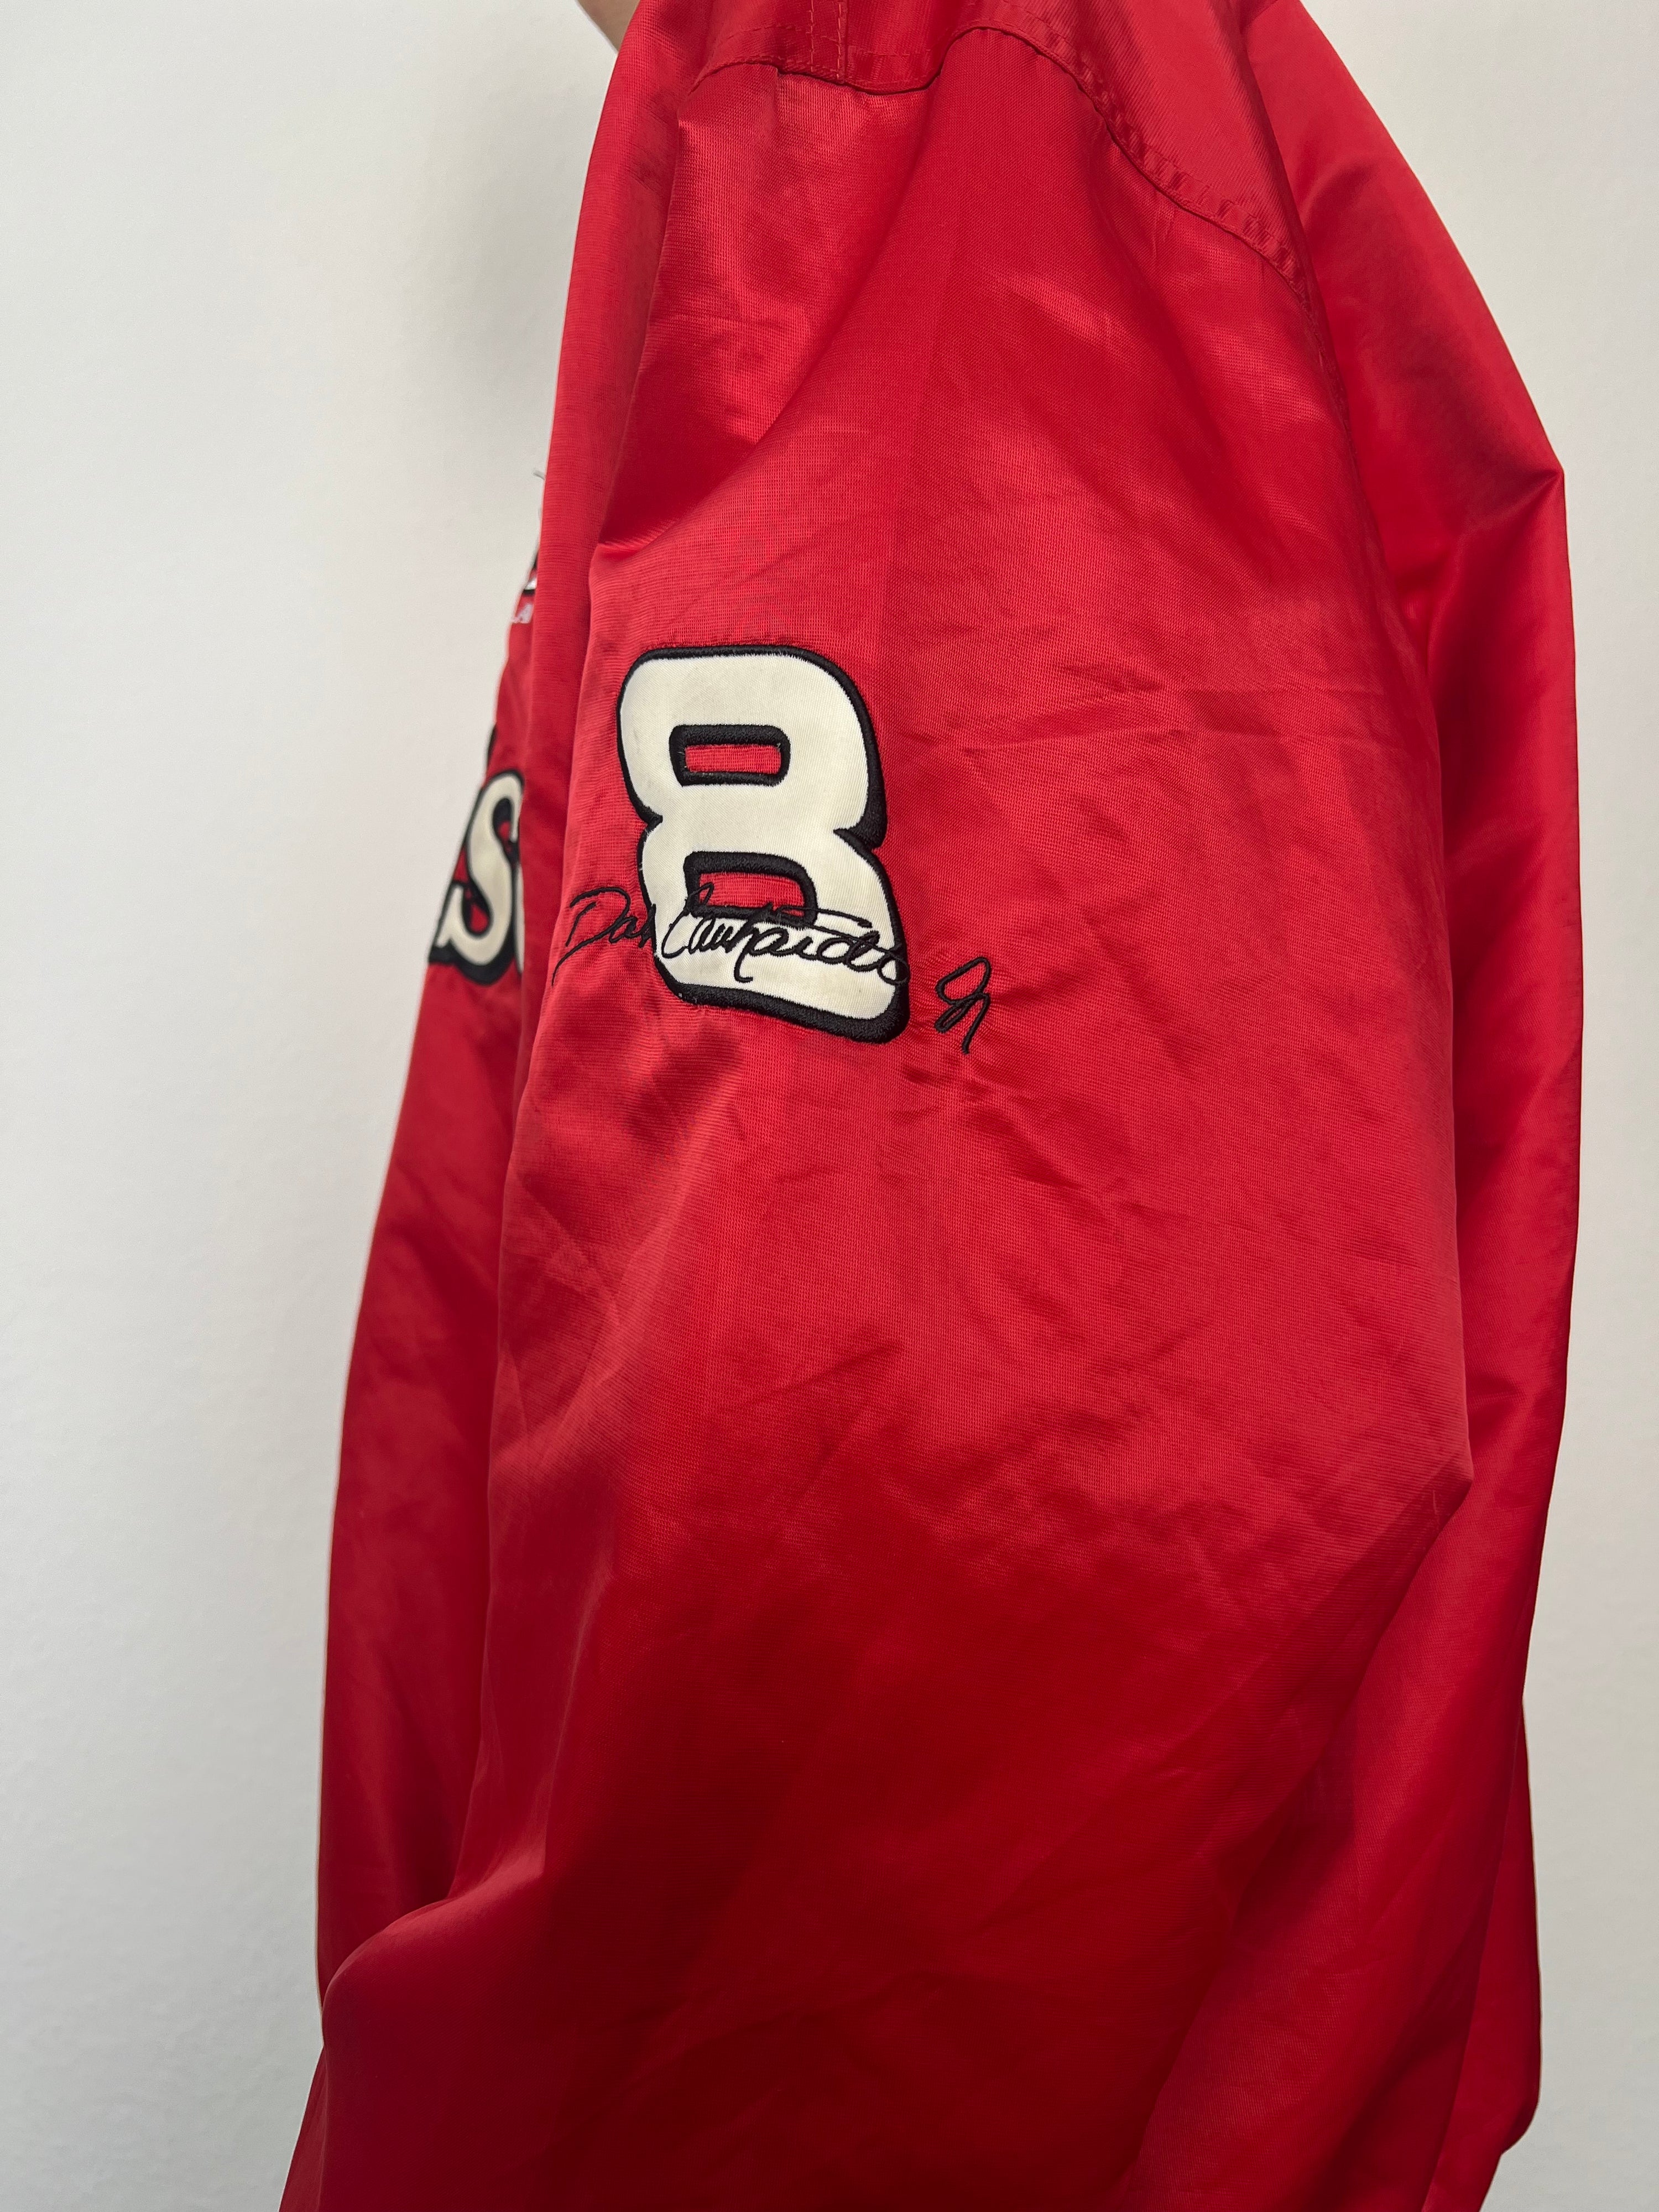 Vintage 90s Nascar Budweiser Racing College Jacket (XL)